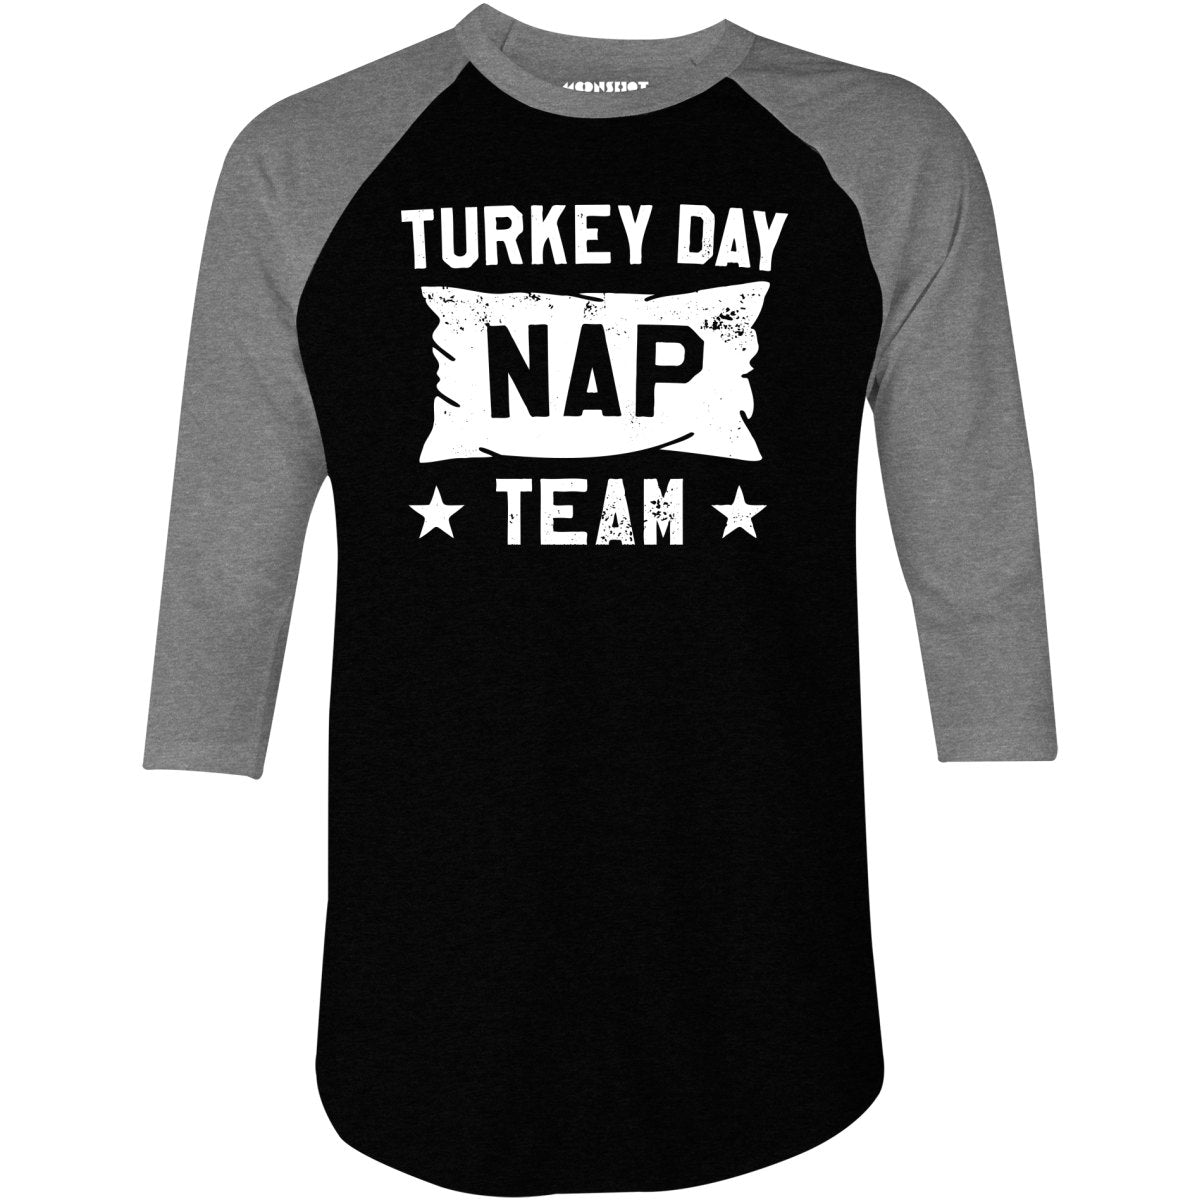 Turkey Day Nap Team - 3/4 Sleeve Raglan T-Shirt